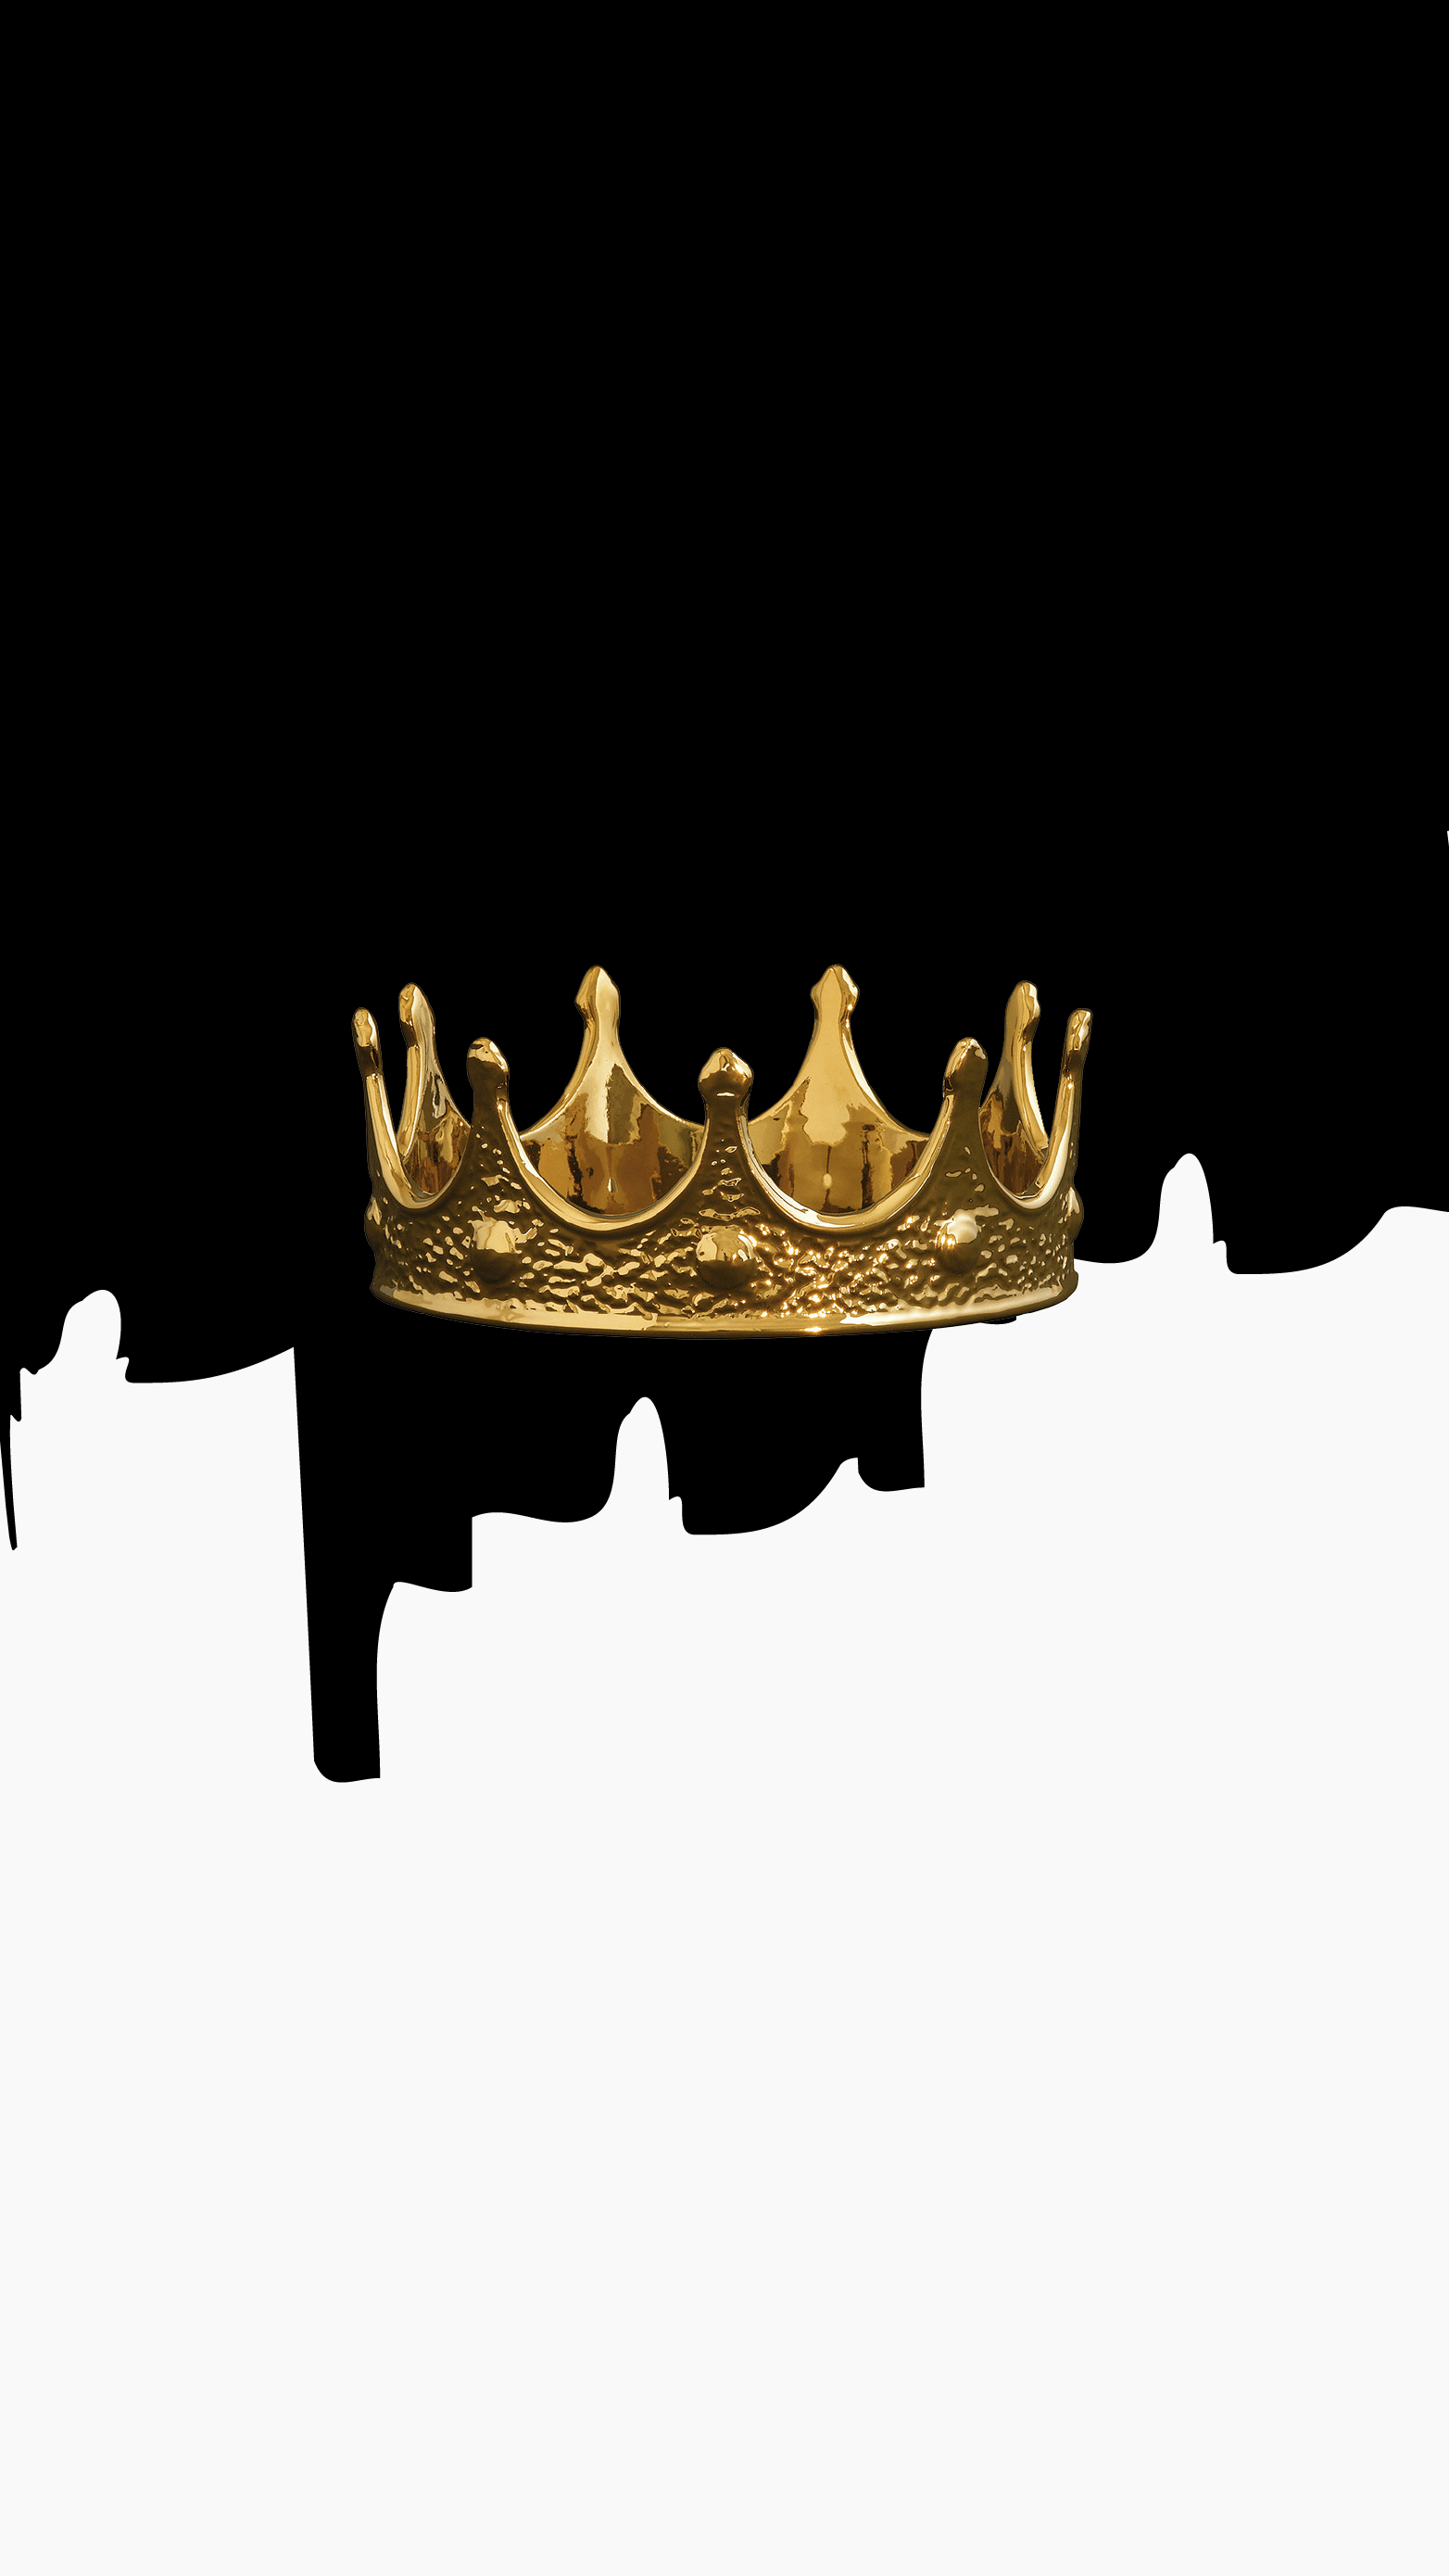 Queen With Crown Wallpaper Download  MobCup